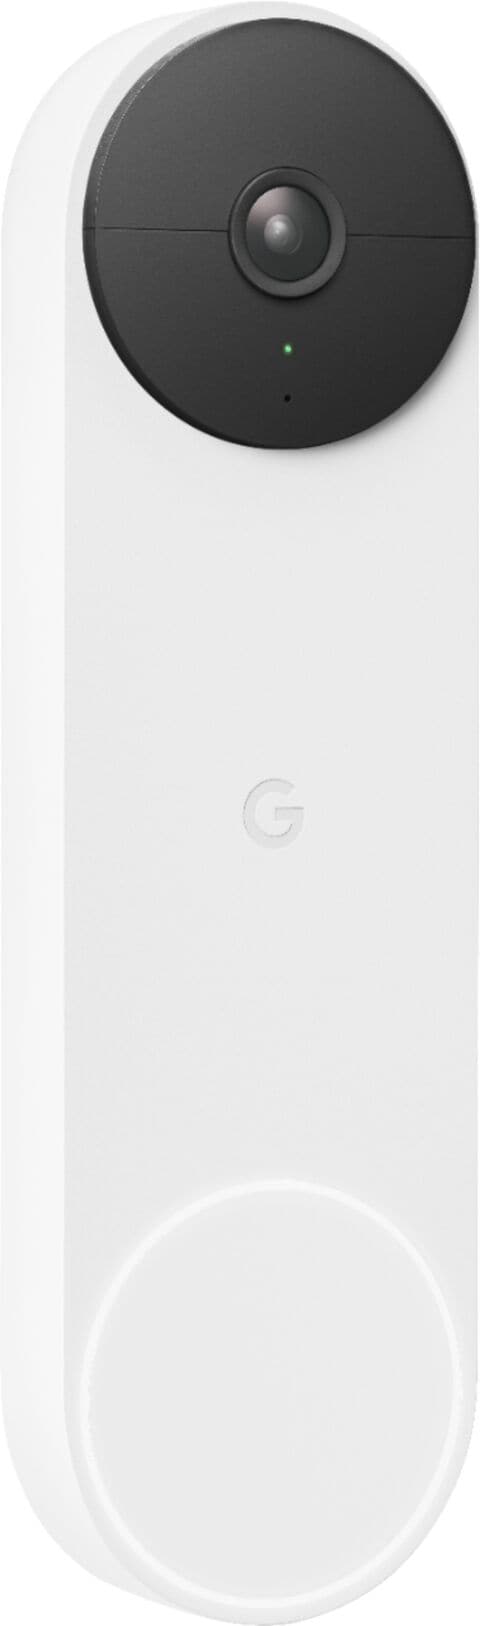 Google Nest Doorbell Battery Powered, Snow (GA01318-US)